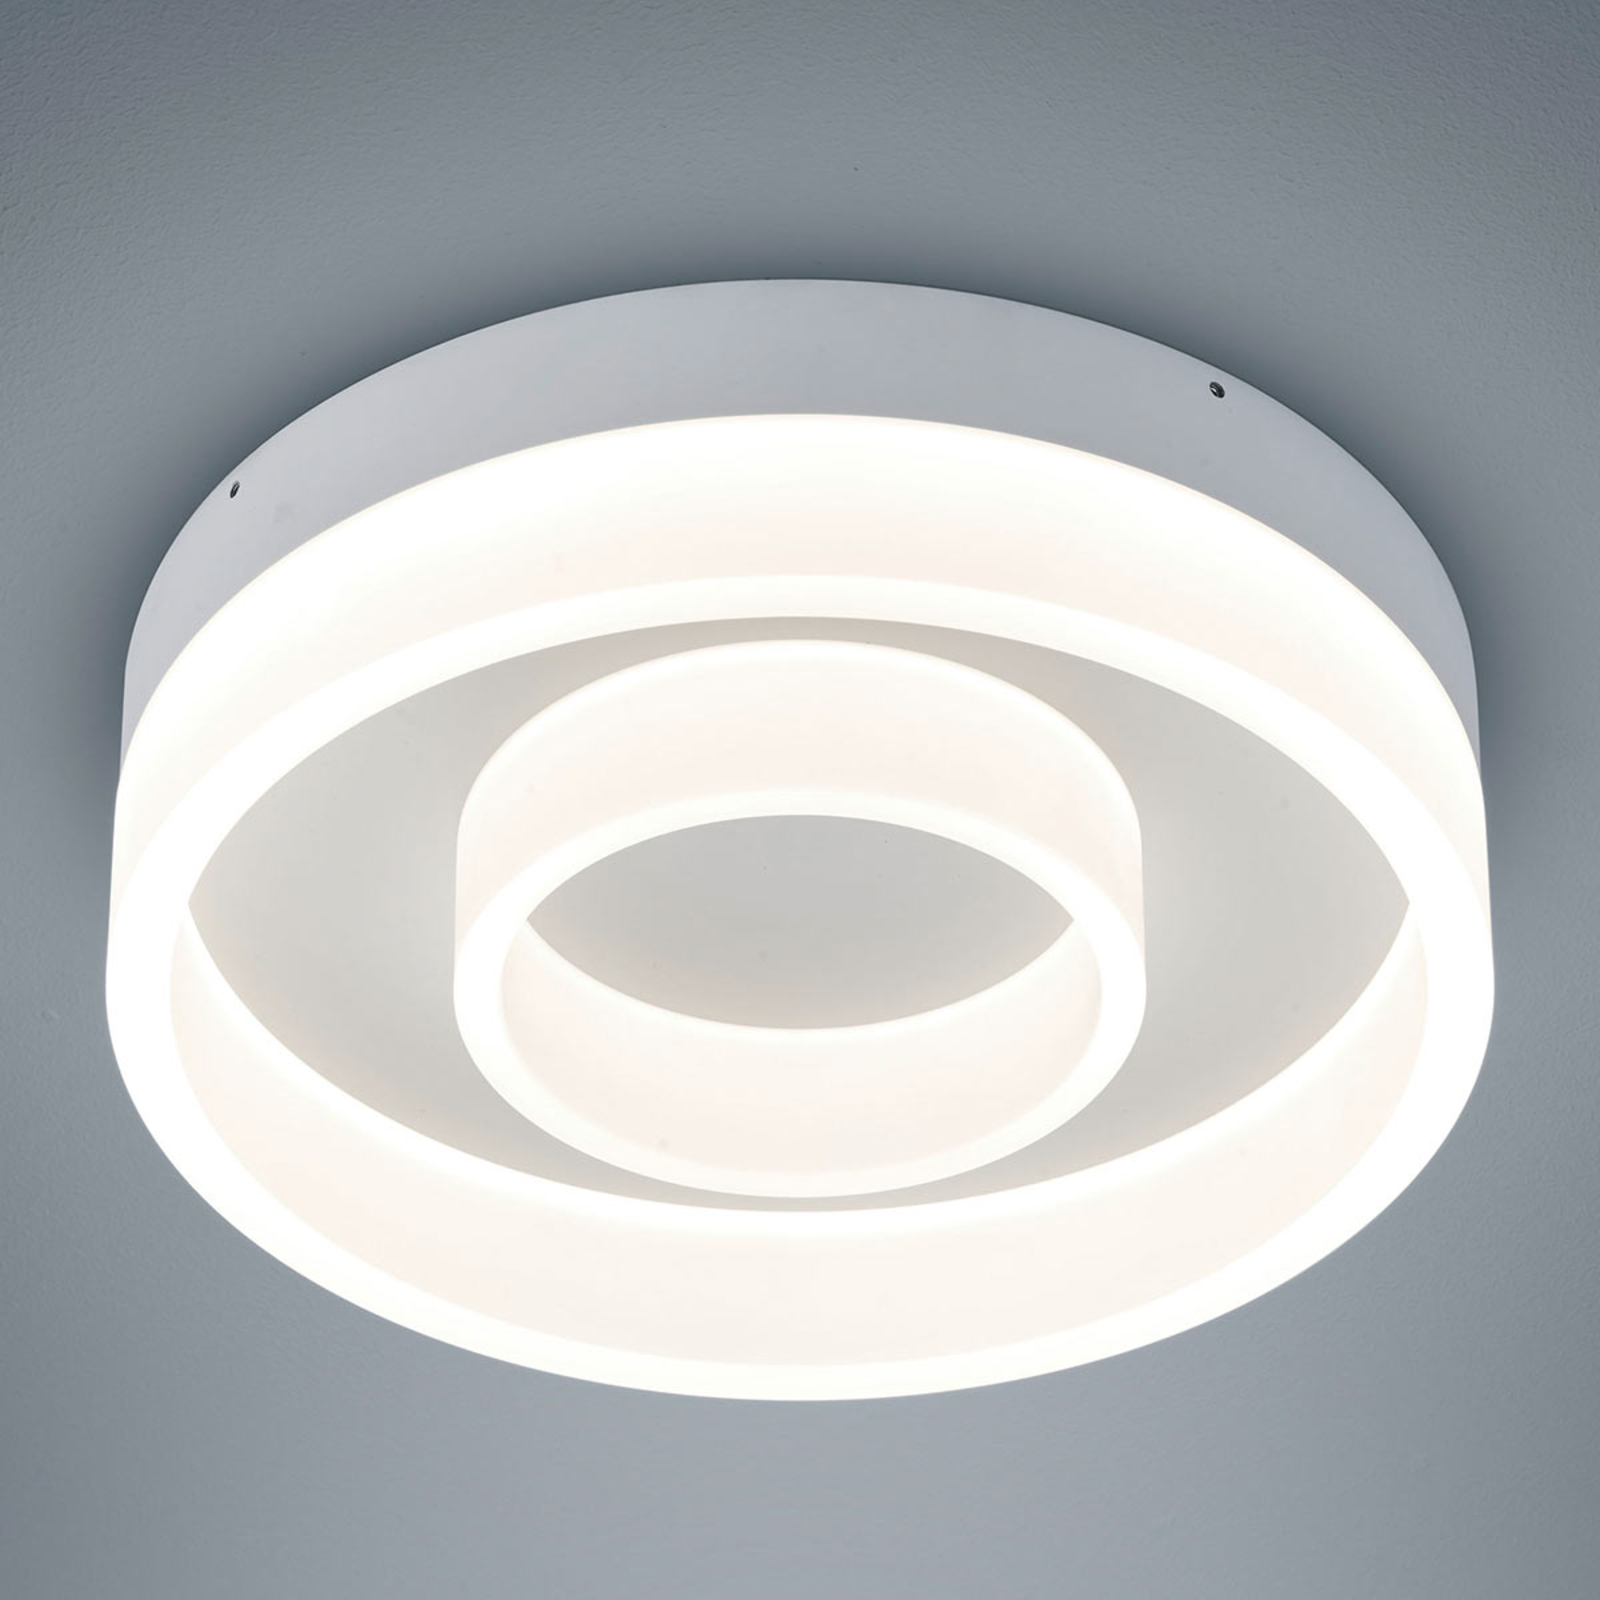 Helestra Liv - round LED ceiling light, Ø 30cm